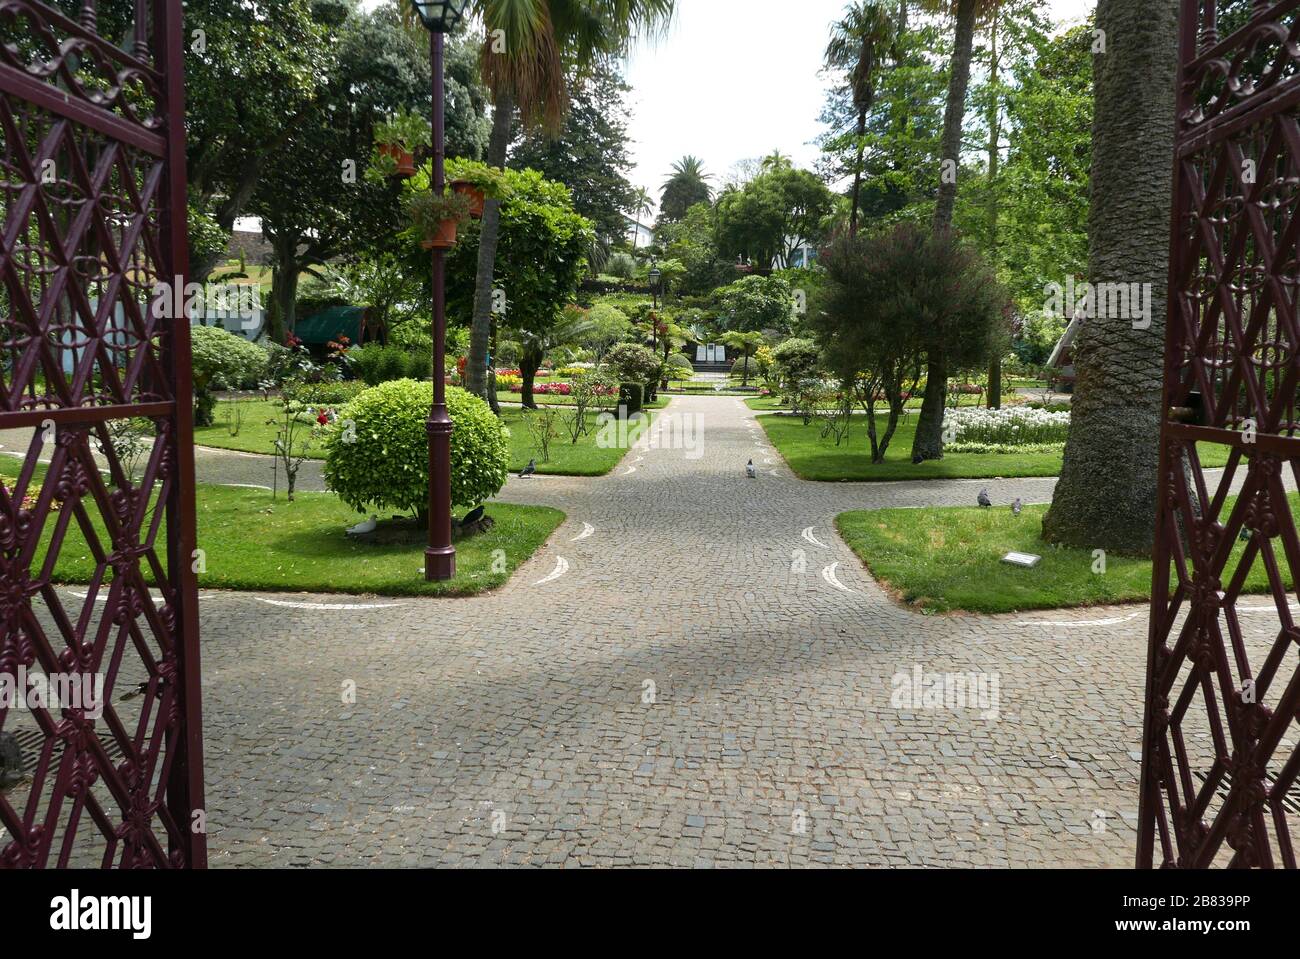 Jardim Duque de Terceira a public garden in the center of Angra do Heroísmo on the island of Terceira in the Azores archipelago. Stock Photo